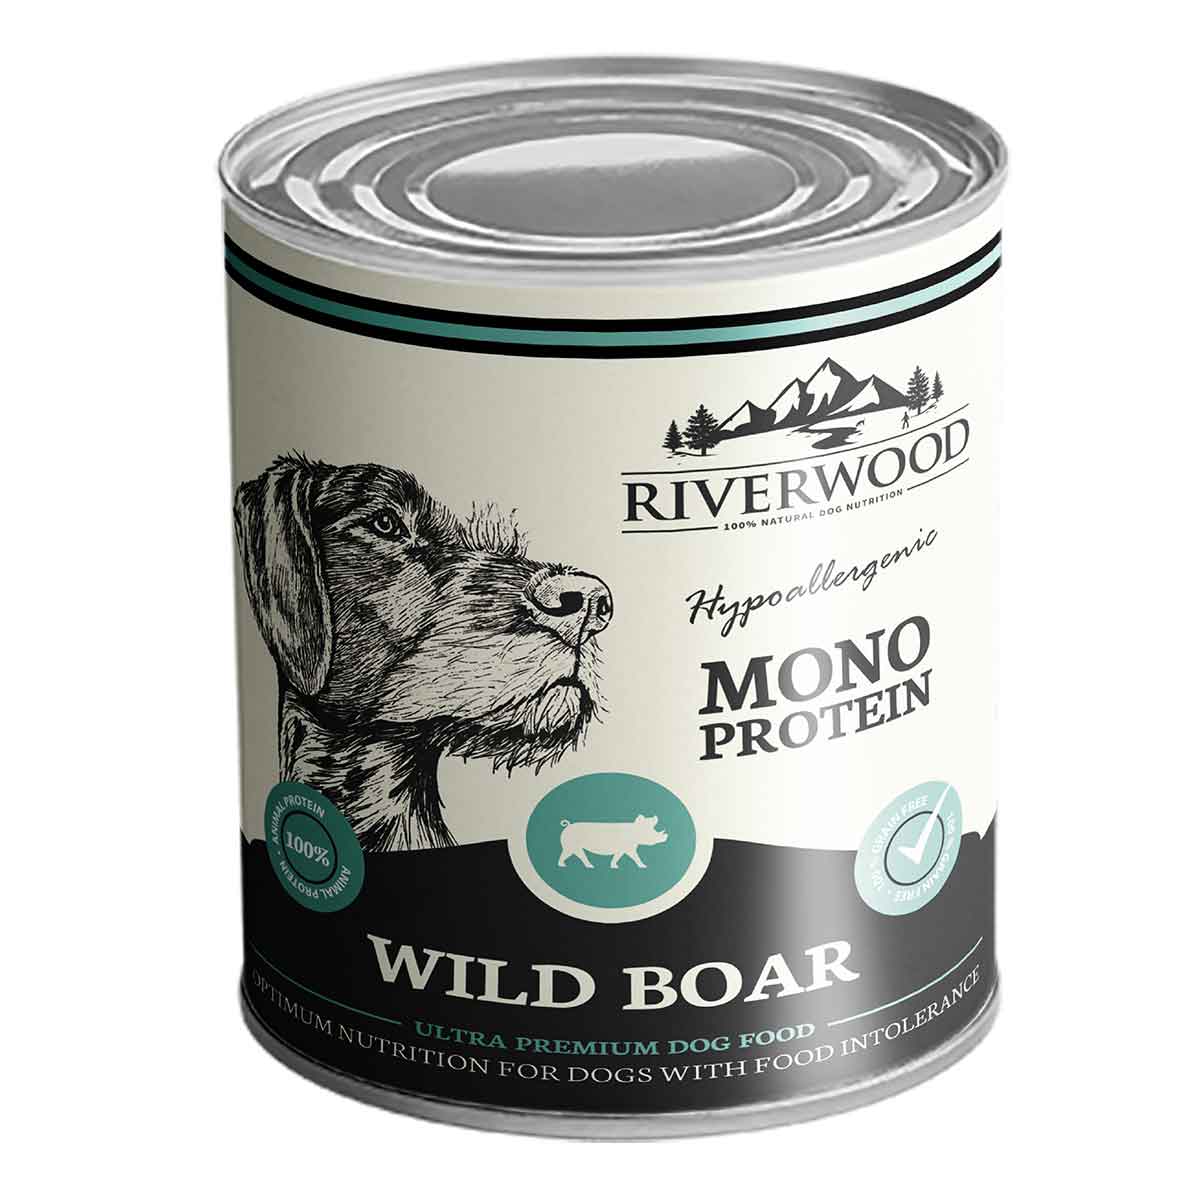 Riverwood Mono Proteine Wild Boar